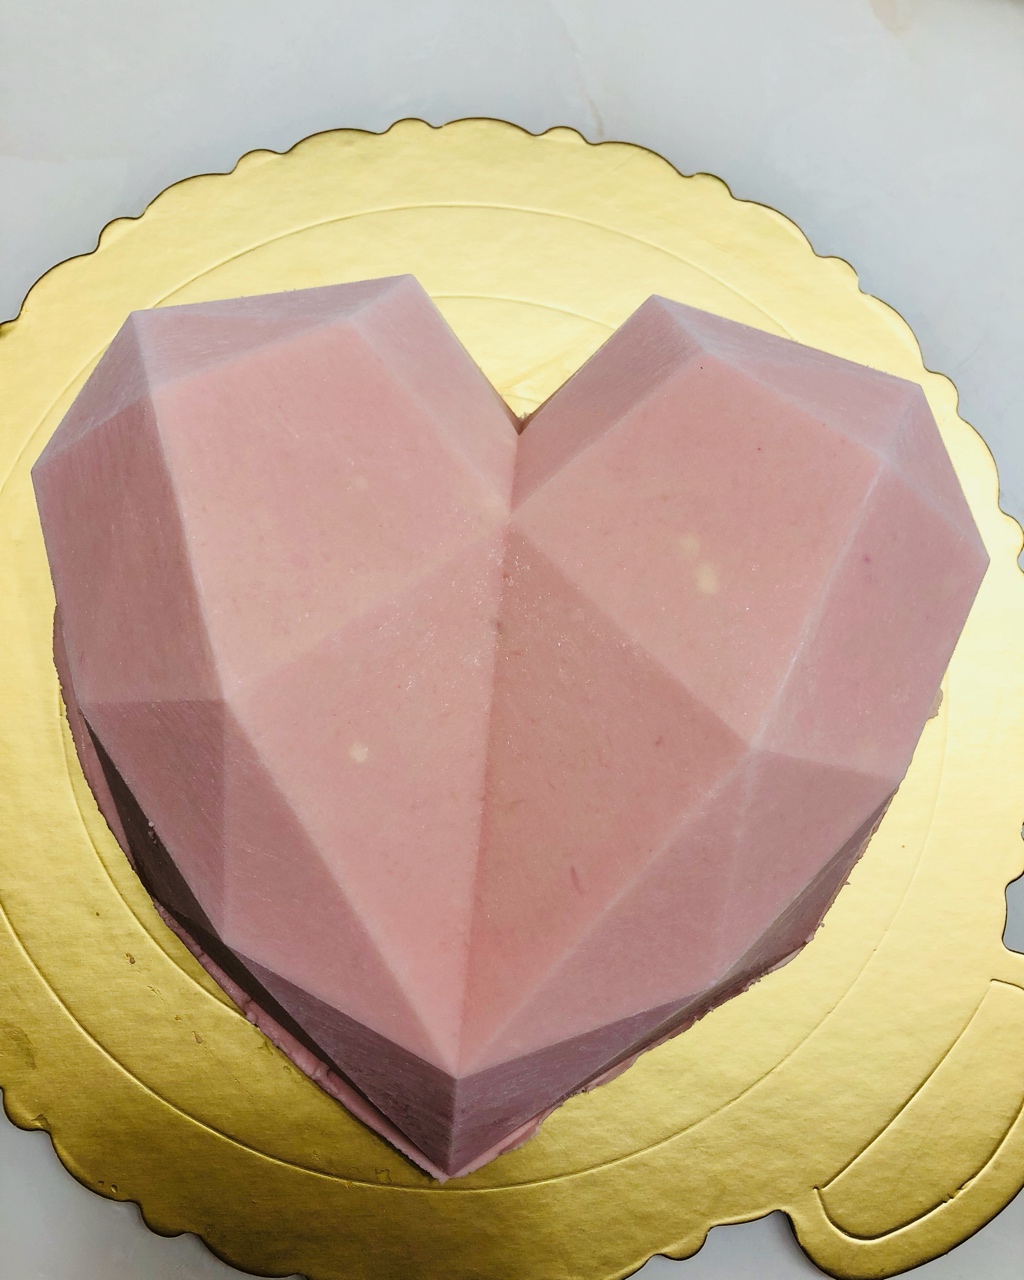 joanna1688做的钻石心形榴莲慕斯蛋糕